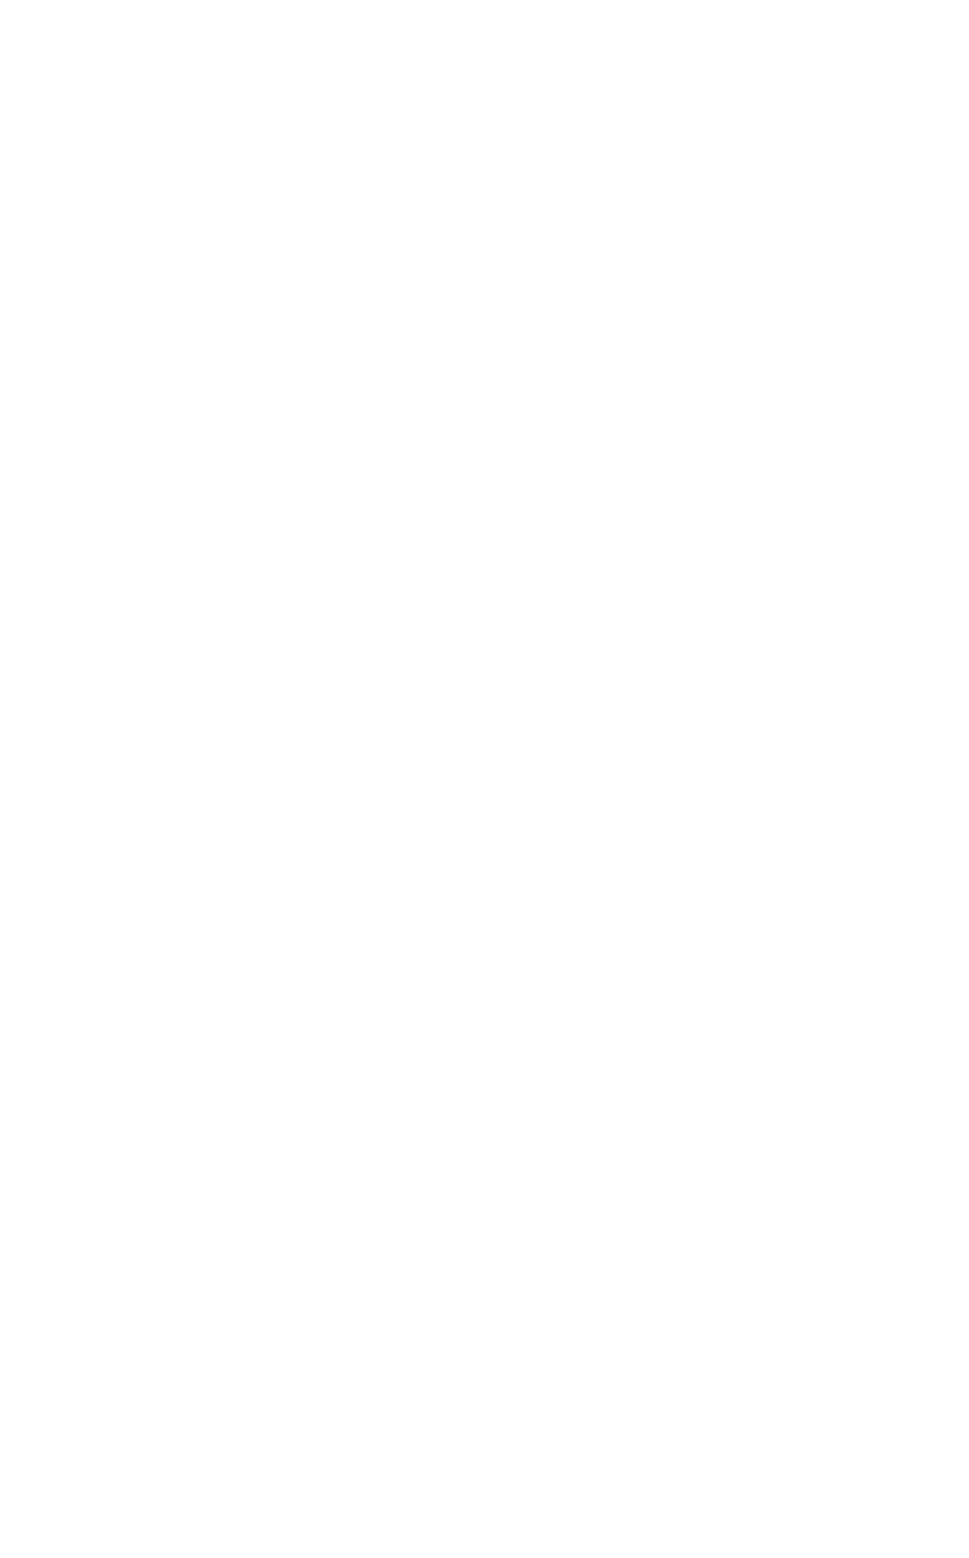 Batelco (Bahrain Telecommunication Company) logo for dark backgrounds (transparent PNG)